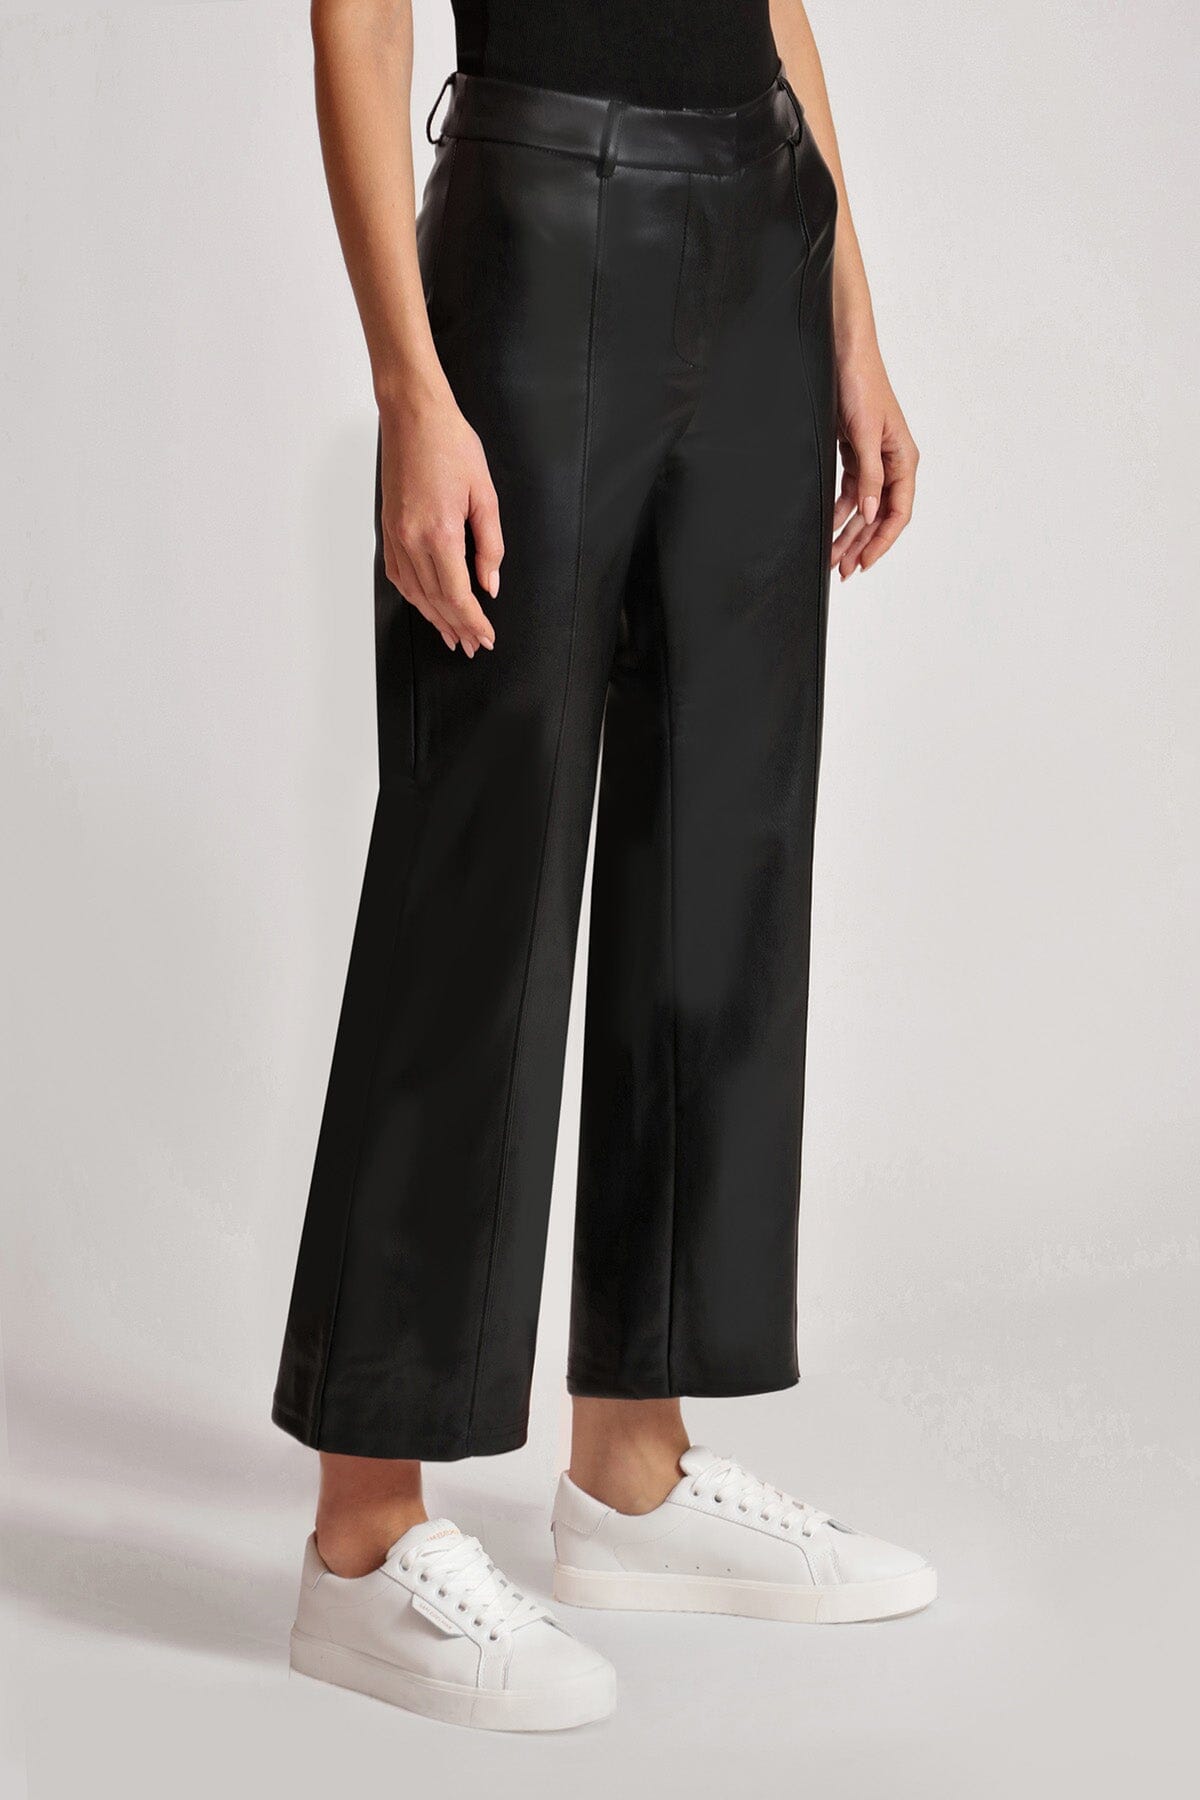 Black faux ever leather wide leg cropped trouser pant pants by Avec Les Filles for women's Fall fashion